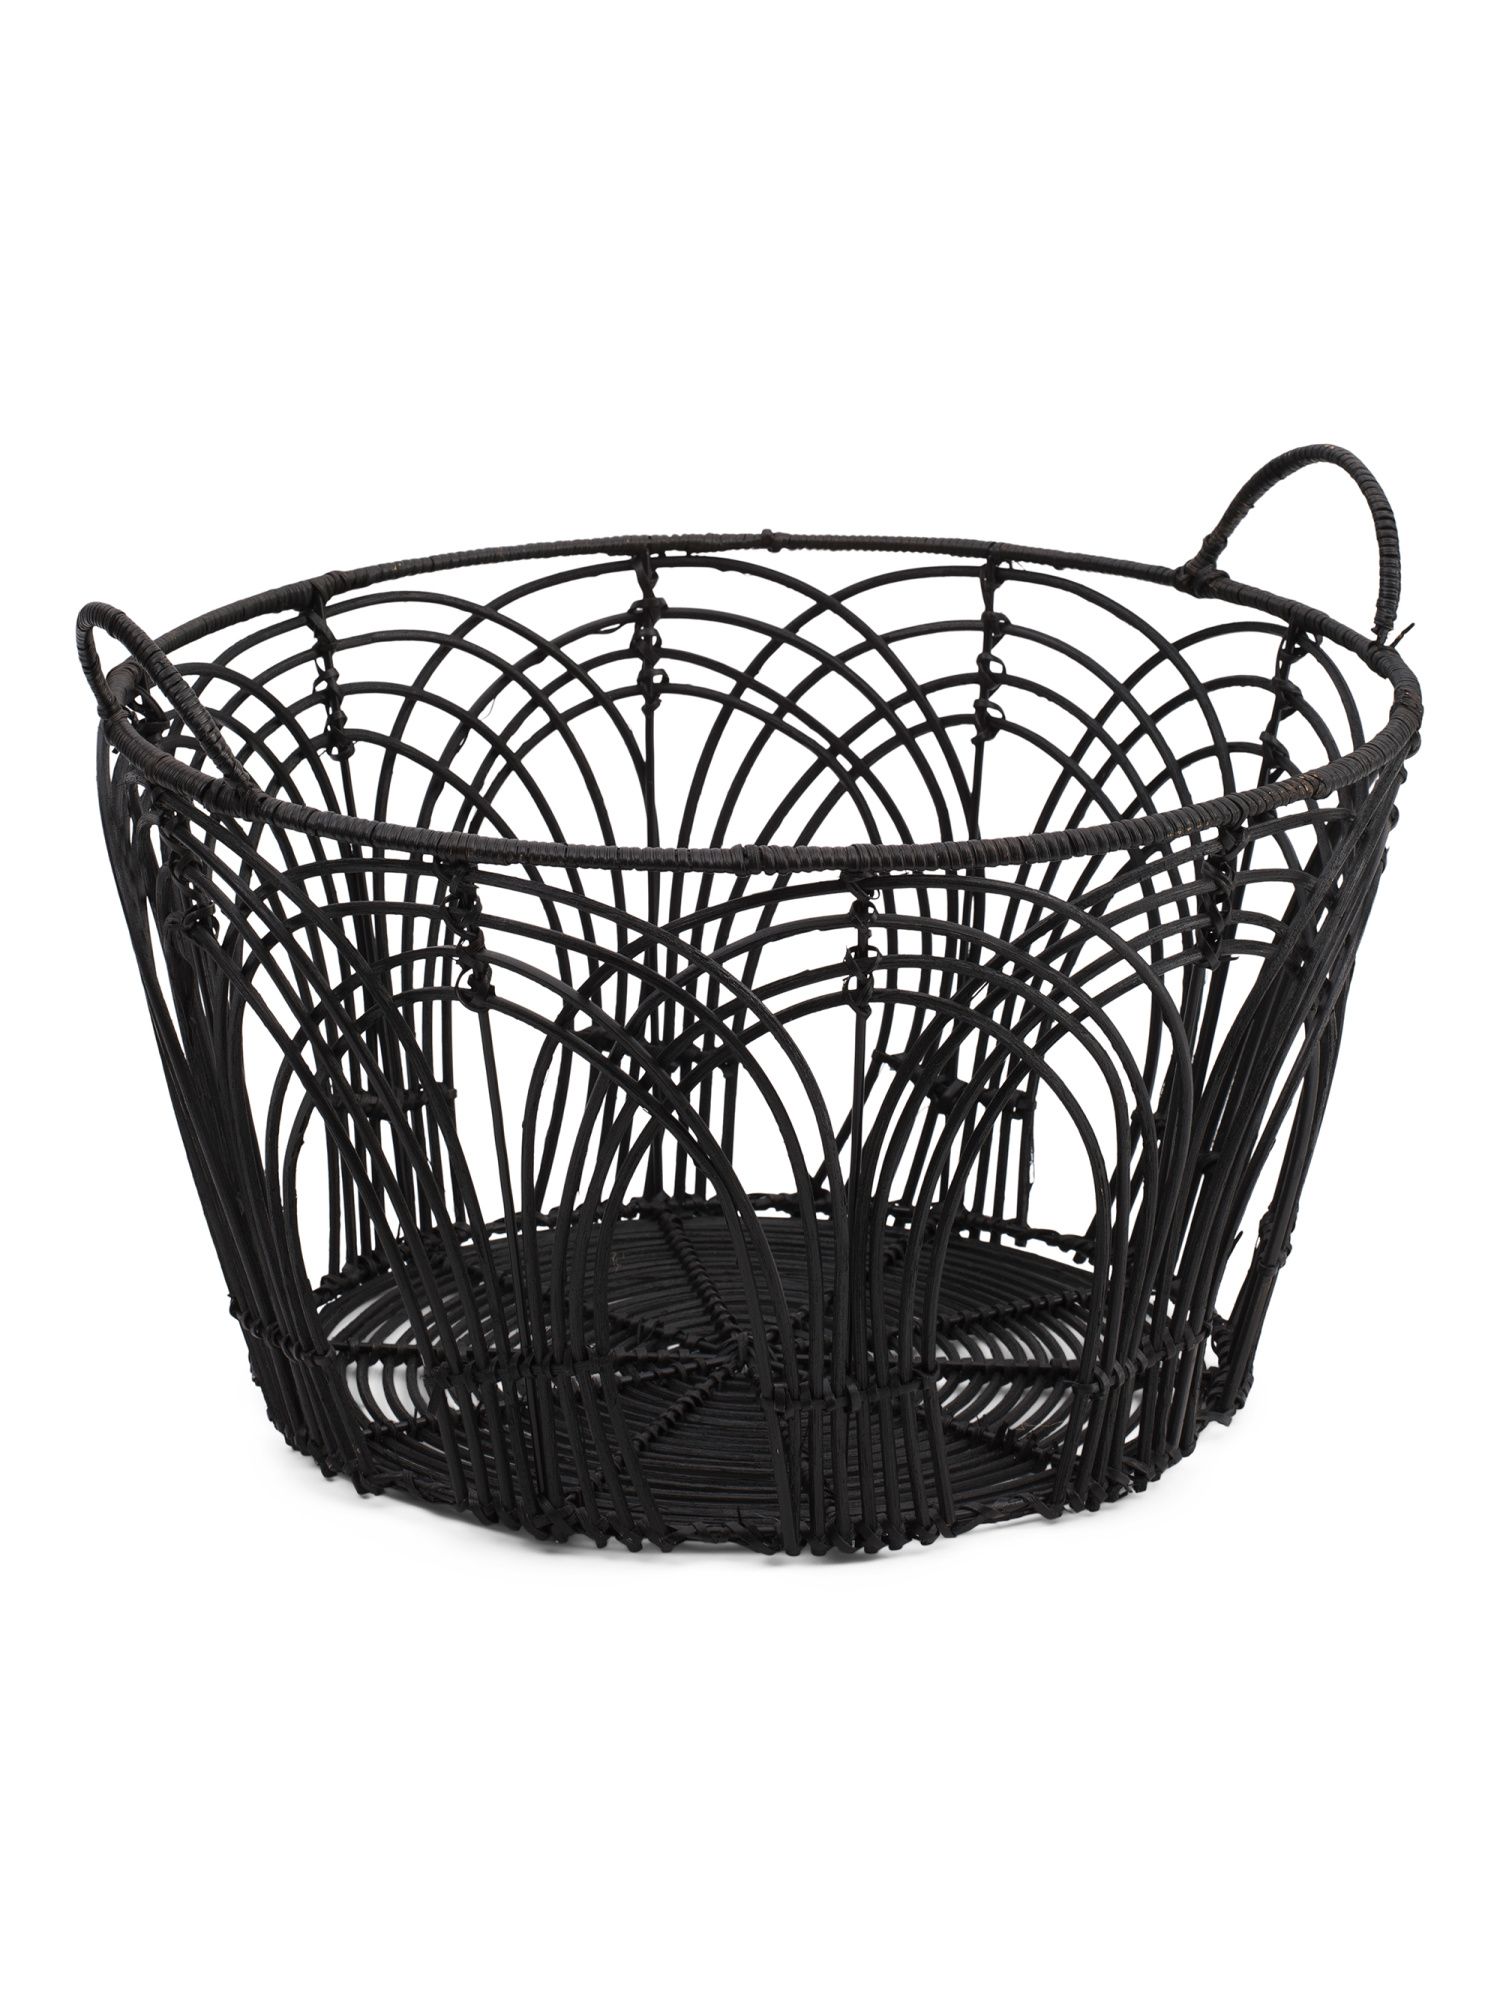 Rattan Storage Basket With Handles | TJ Maxx